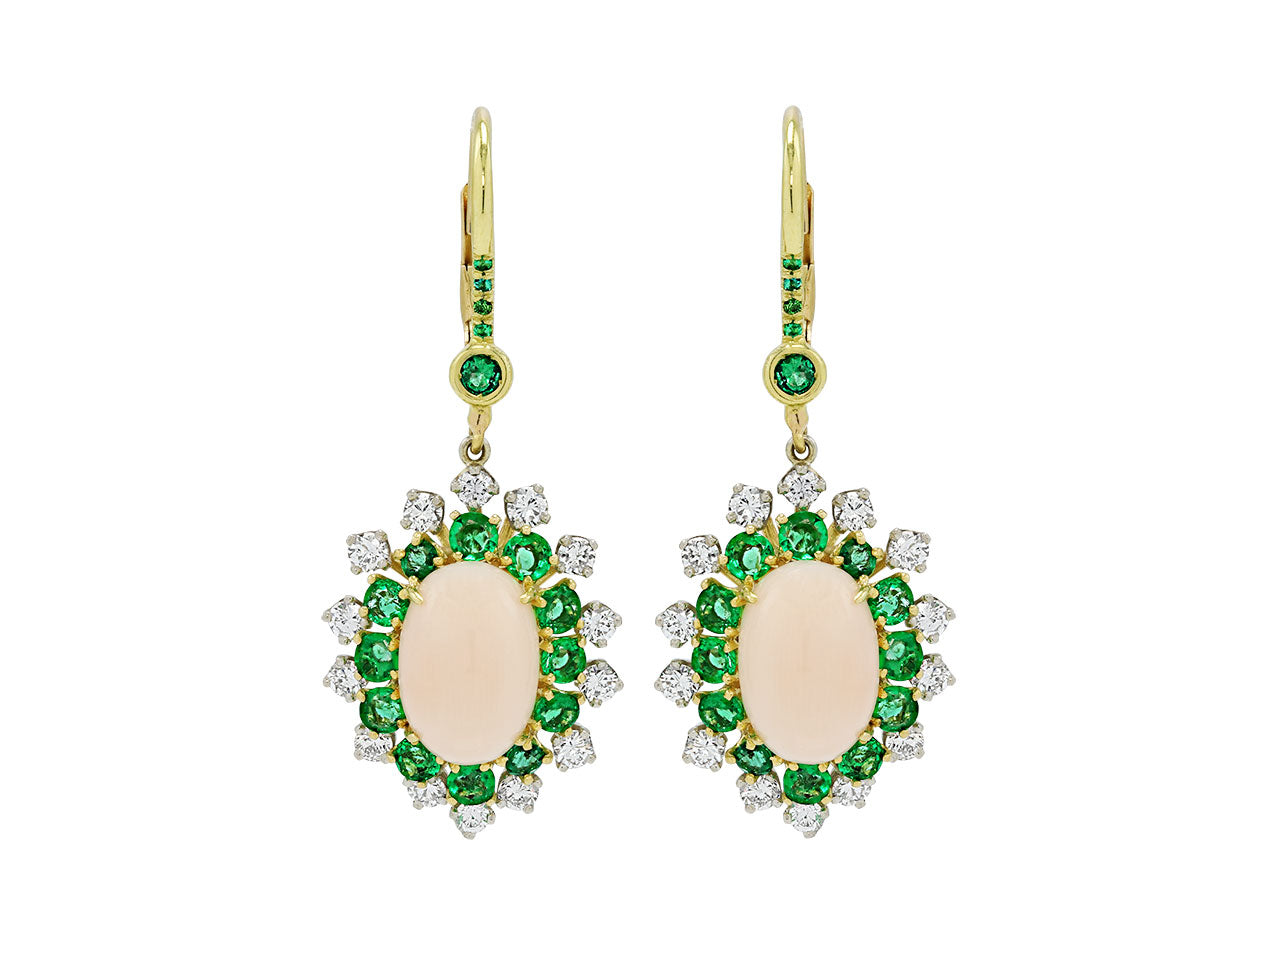 Beladora 'Bespoke' Coral, Emerald and Diamond Earrings in 18K